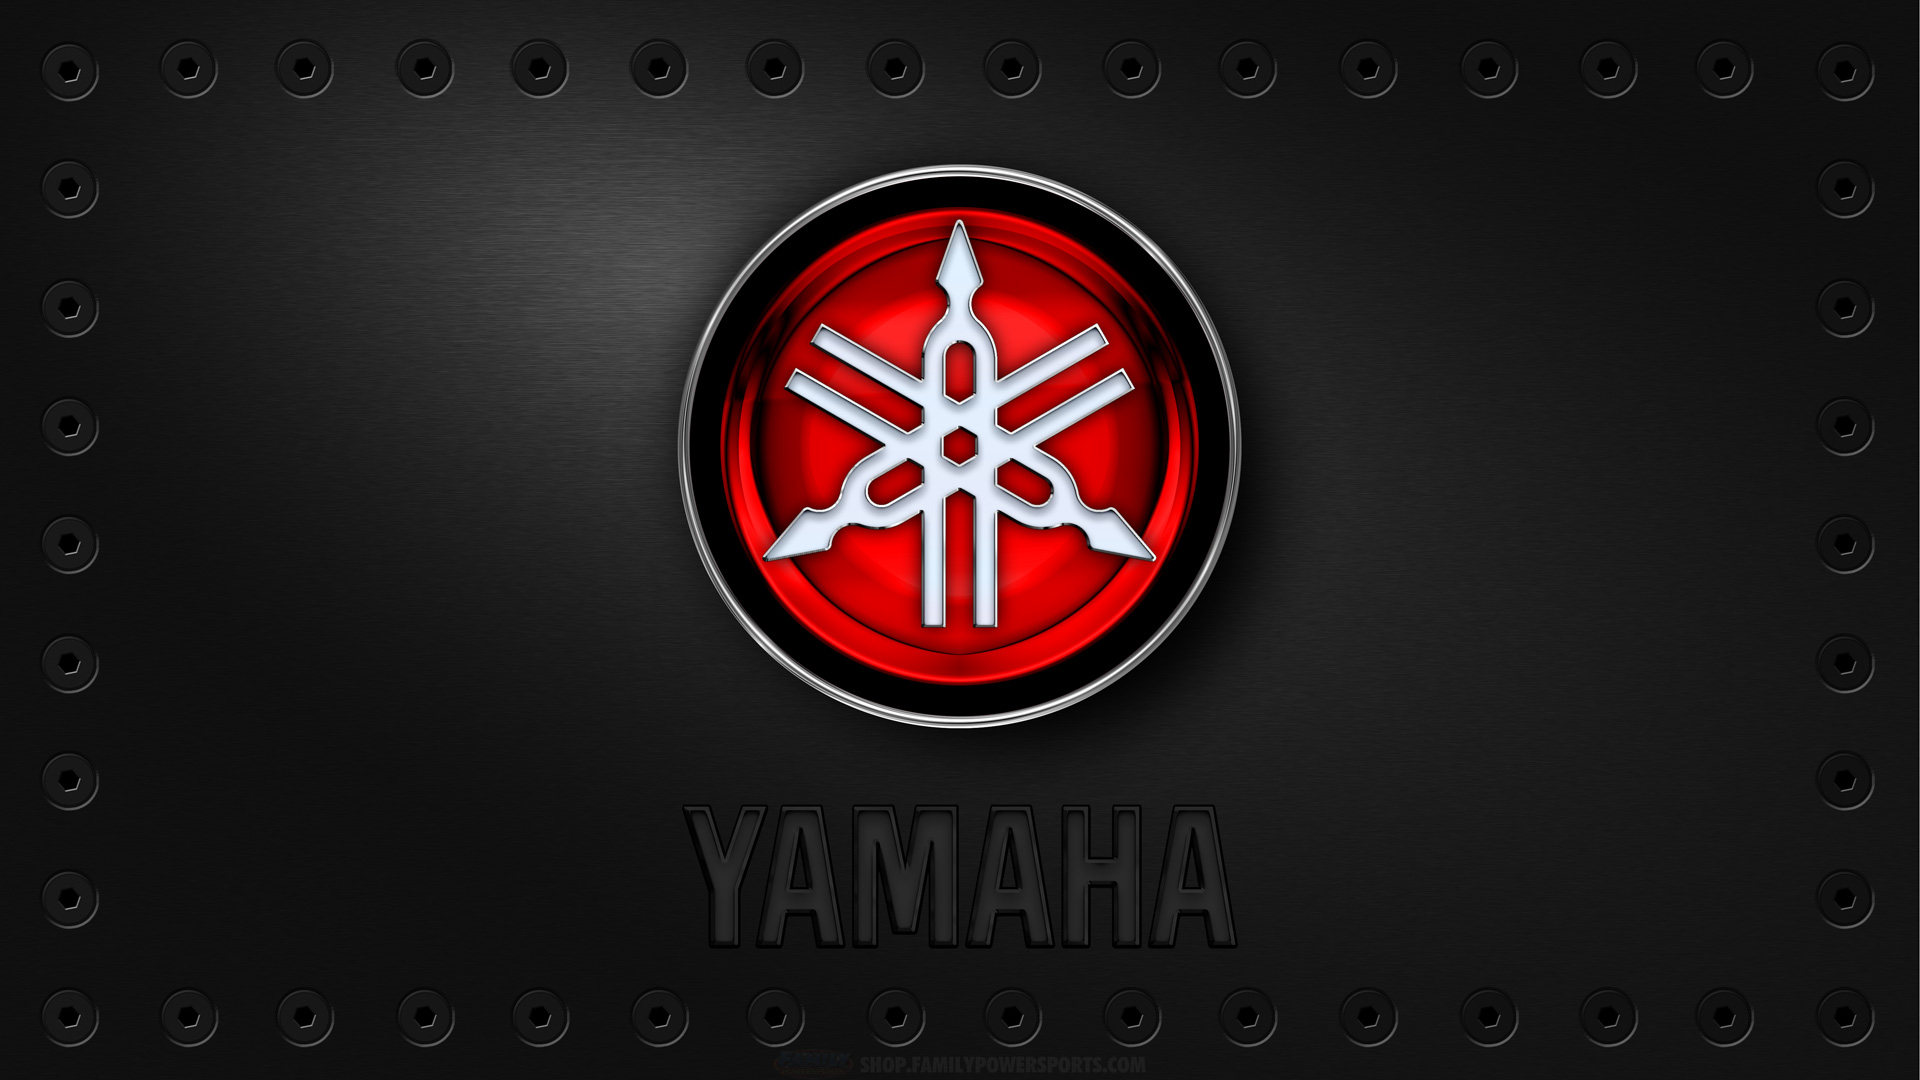 Yamaha logo wallpaper